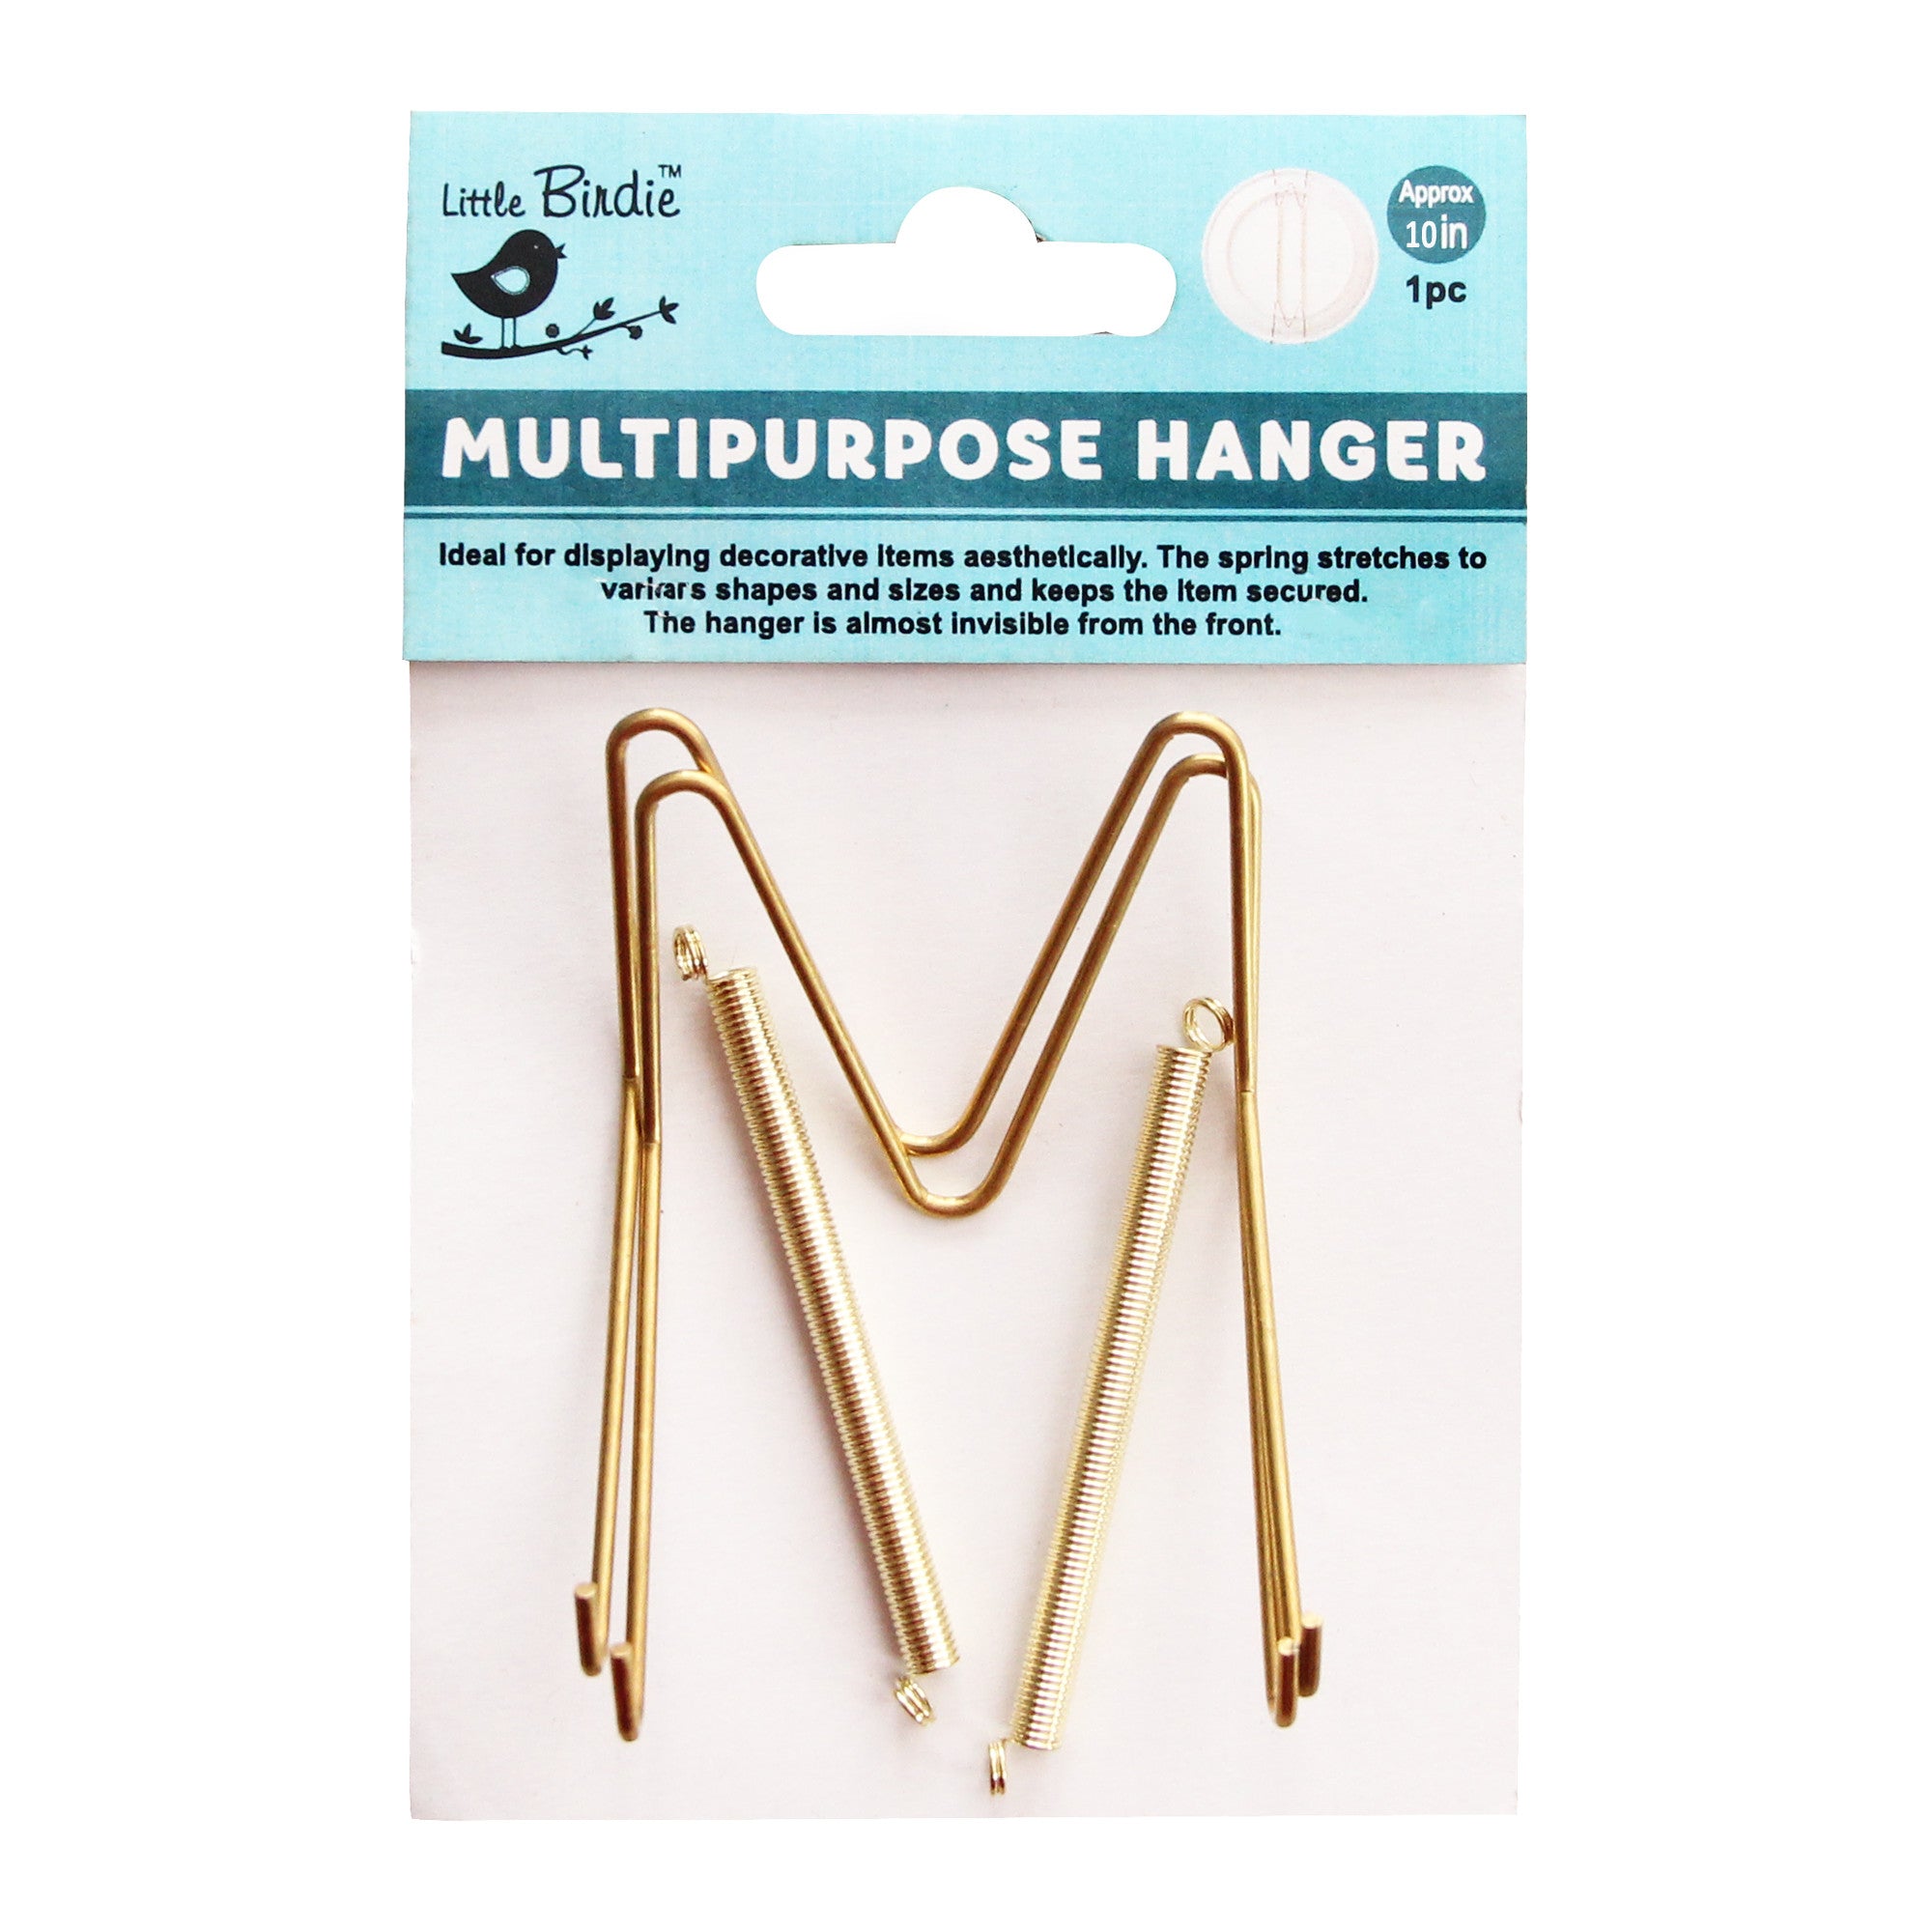 Multipurpose Hanger- 10inch, 1pc